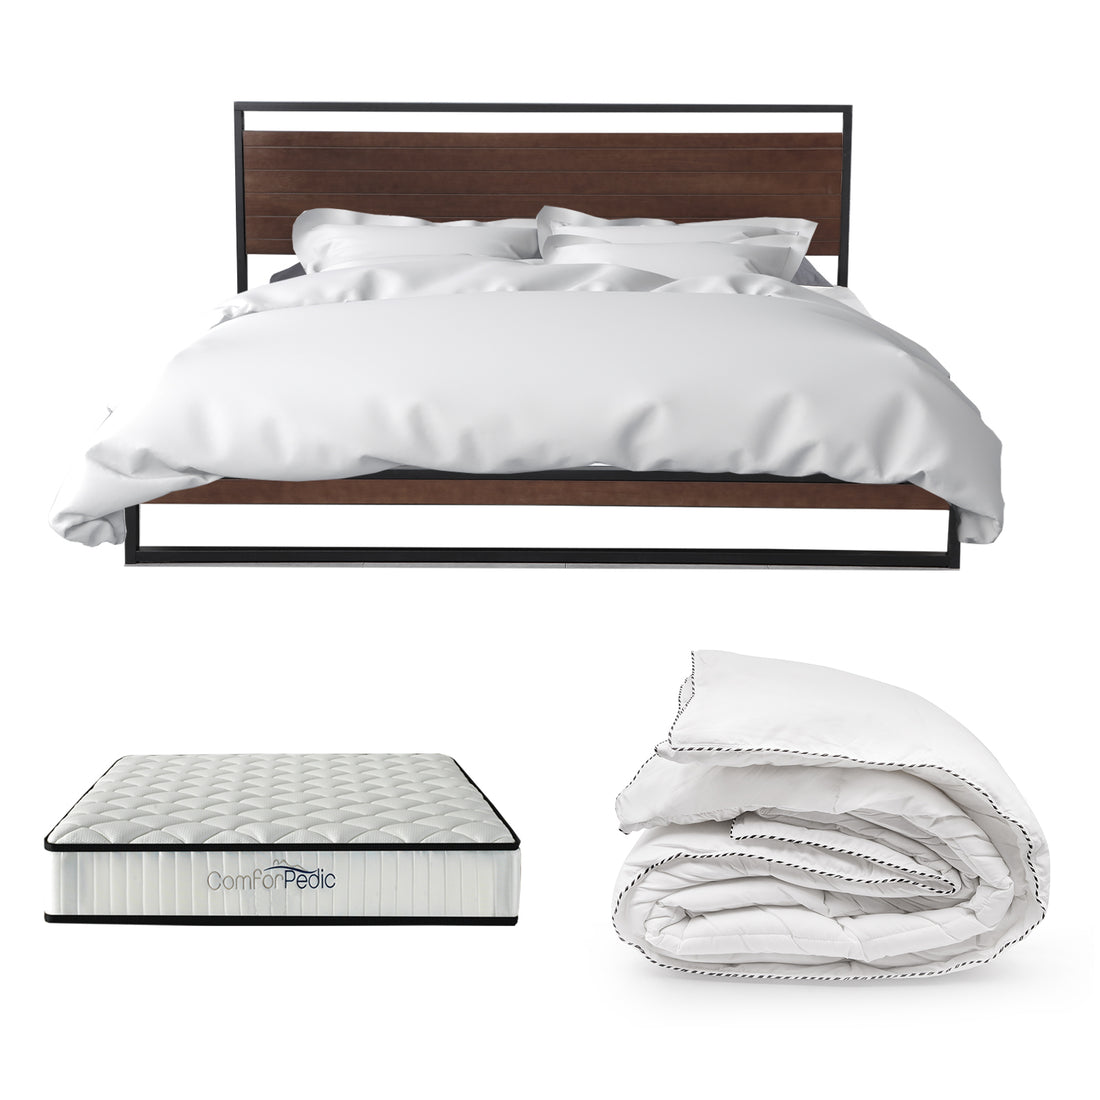 Azure Bed Frame + Comforpedic Mattress + 250GSM Bamboo Quilt Package Deal Set-Mattresses &amp; Futons-PEROZ Accessories